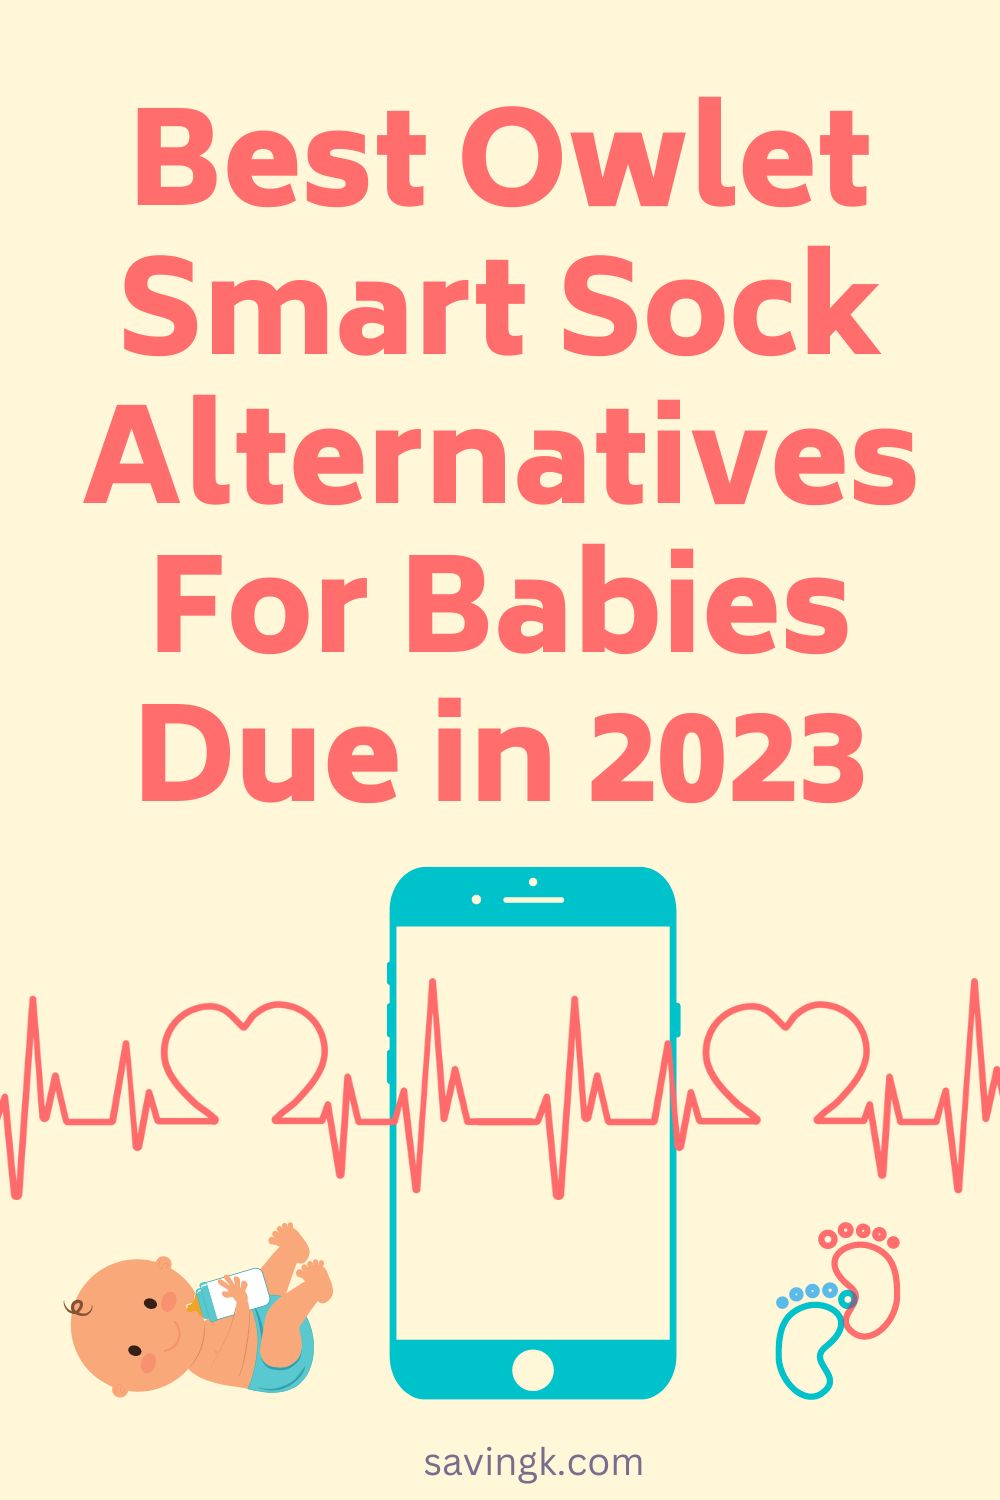 Best Owlet Smart Sock Alternatives For Babies Due in 2023